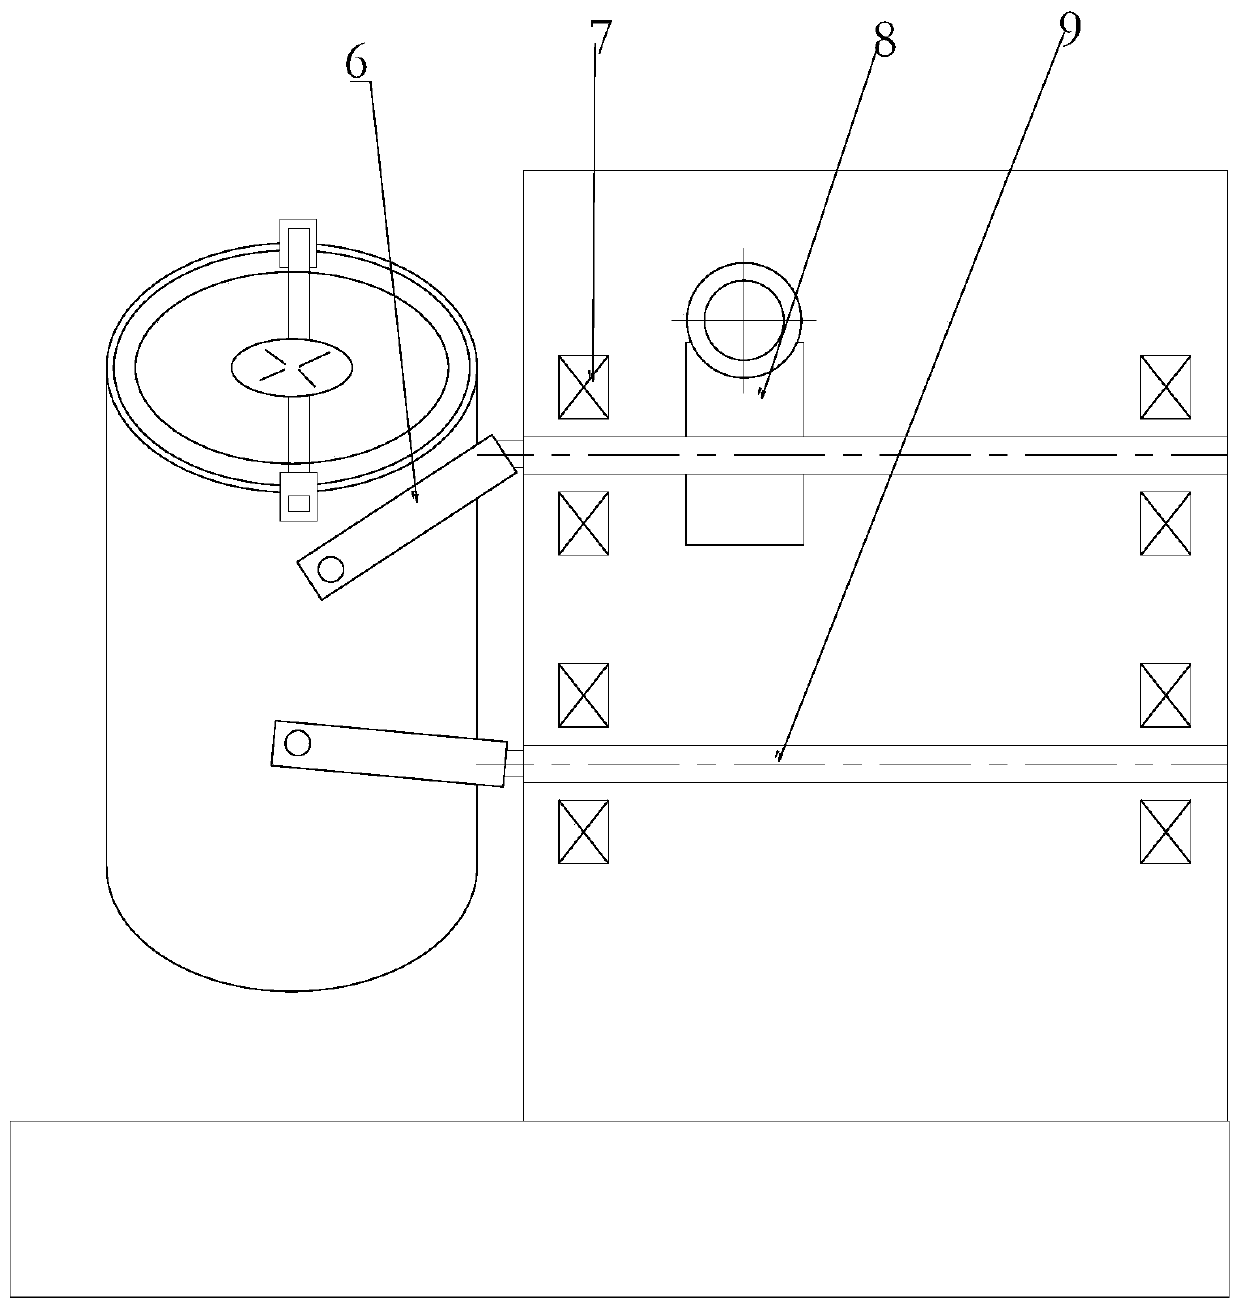 Mixing barrel locking mechanism, automatic locking system and automatic mixing system